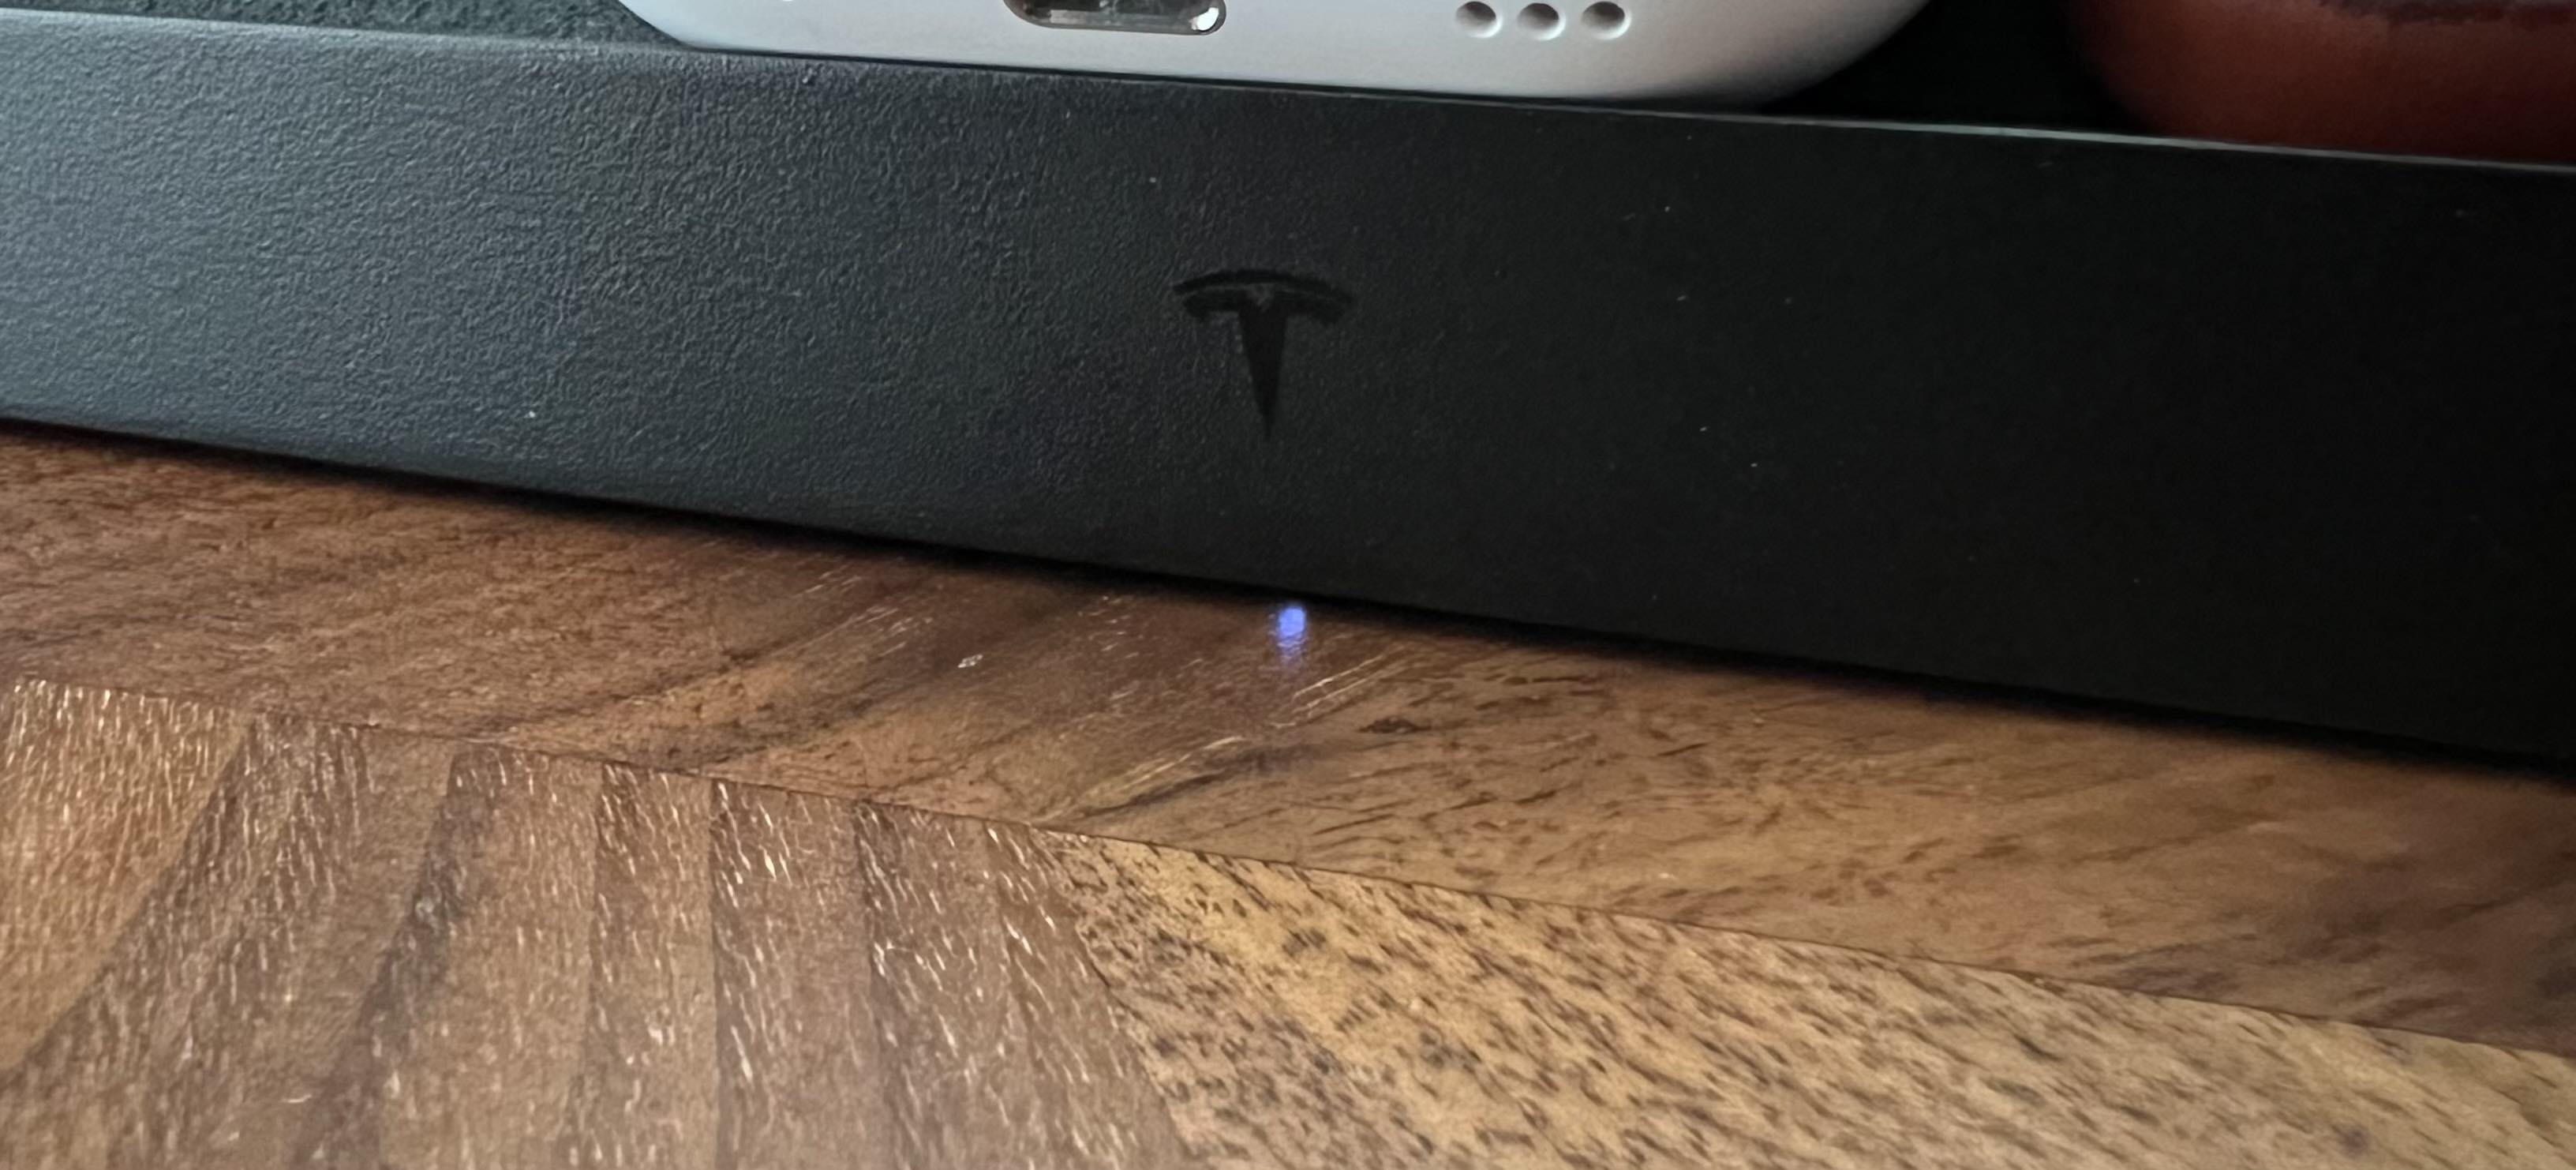 Indikator LED Platform Pengisian Nirkabel Tesla